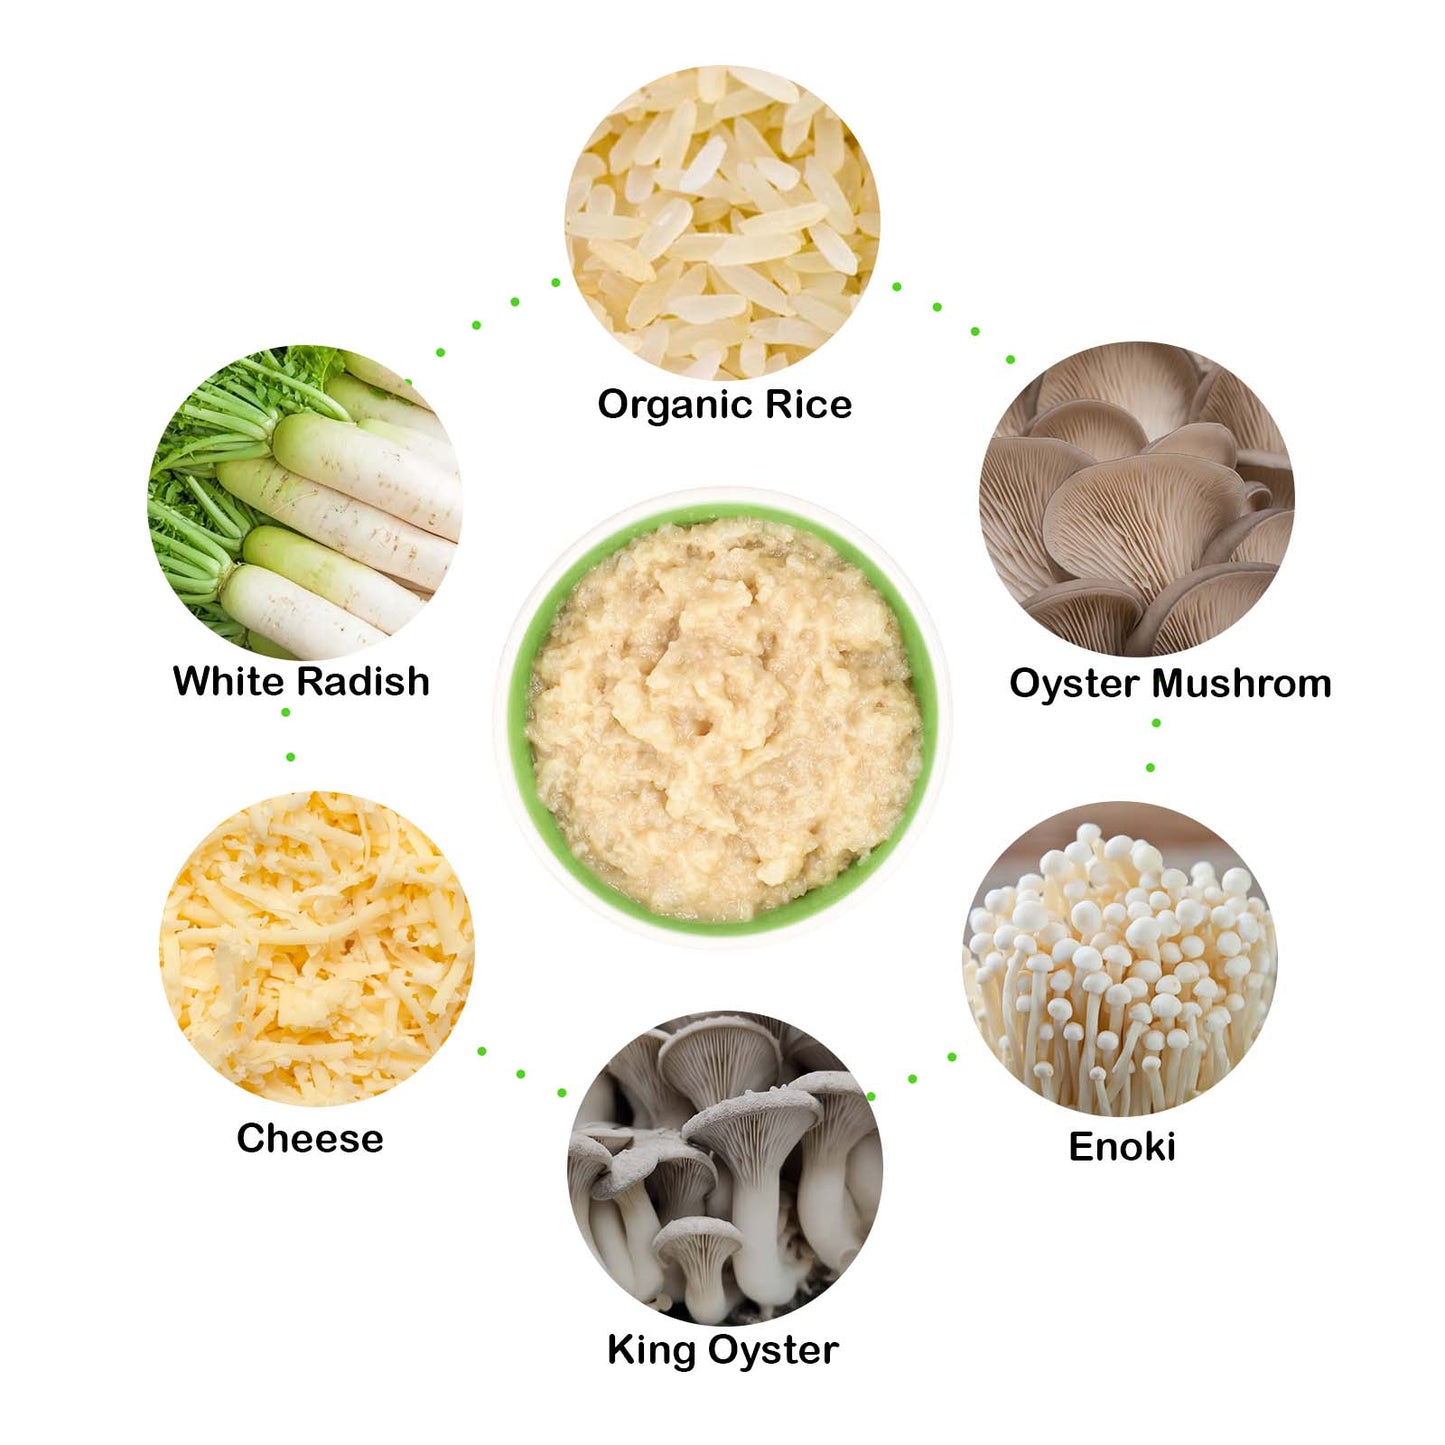 Eusik - 8-Pk Baby Rice Porridge (Mushroom & Cheese) 145g, 8mths+